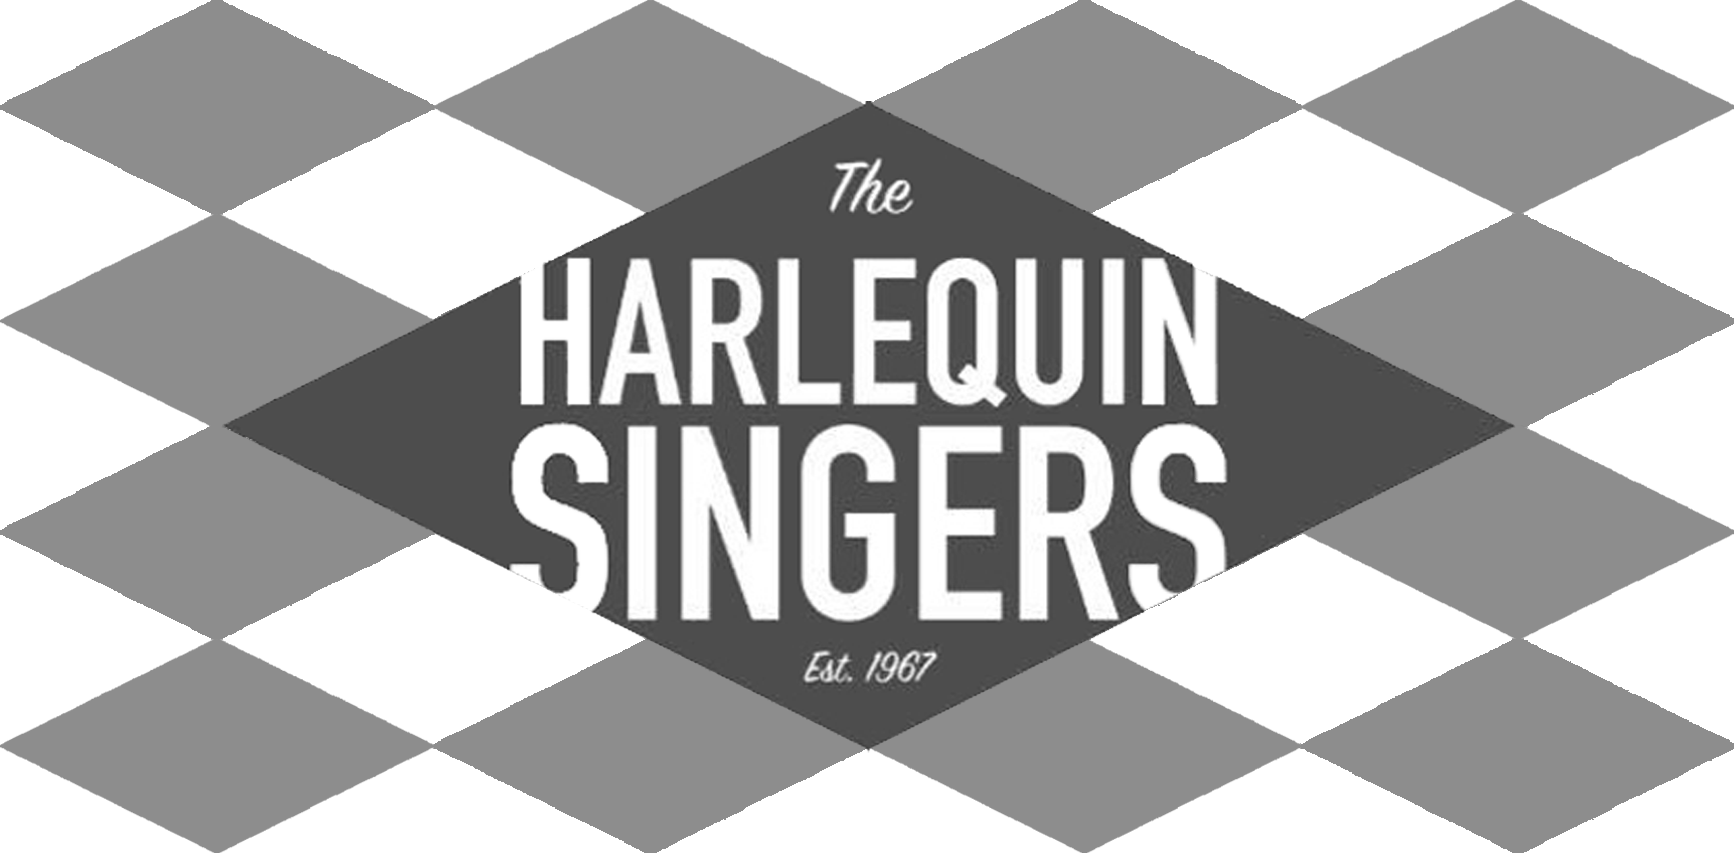 Harlequin Pattern with Harlequin Singers logo